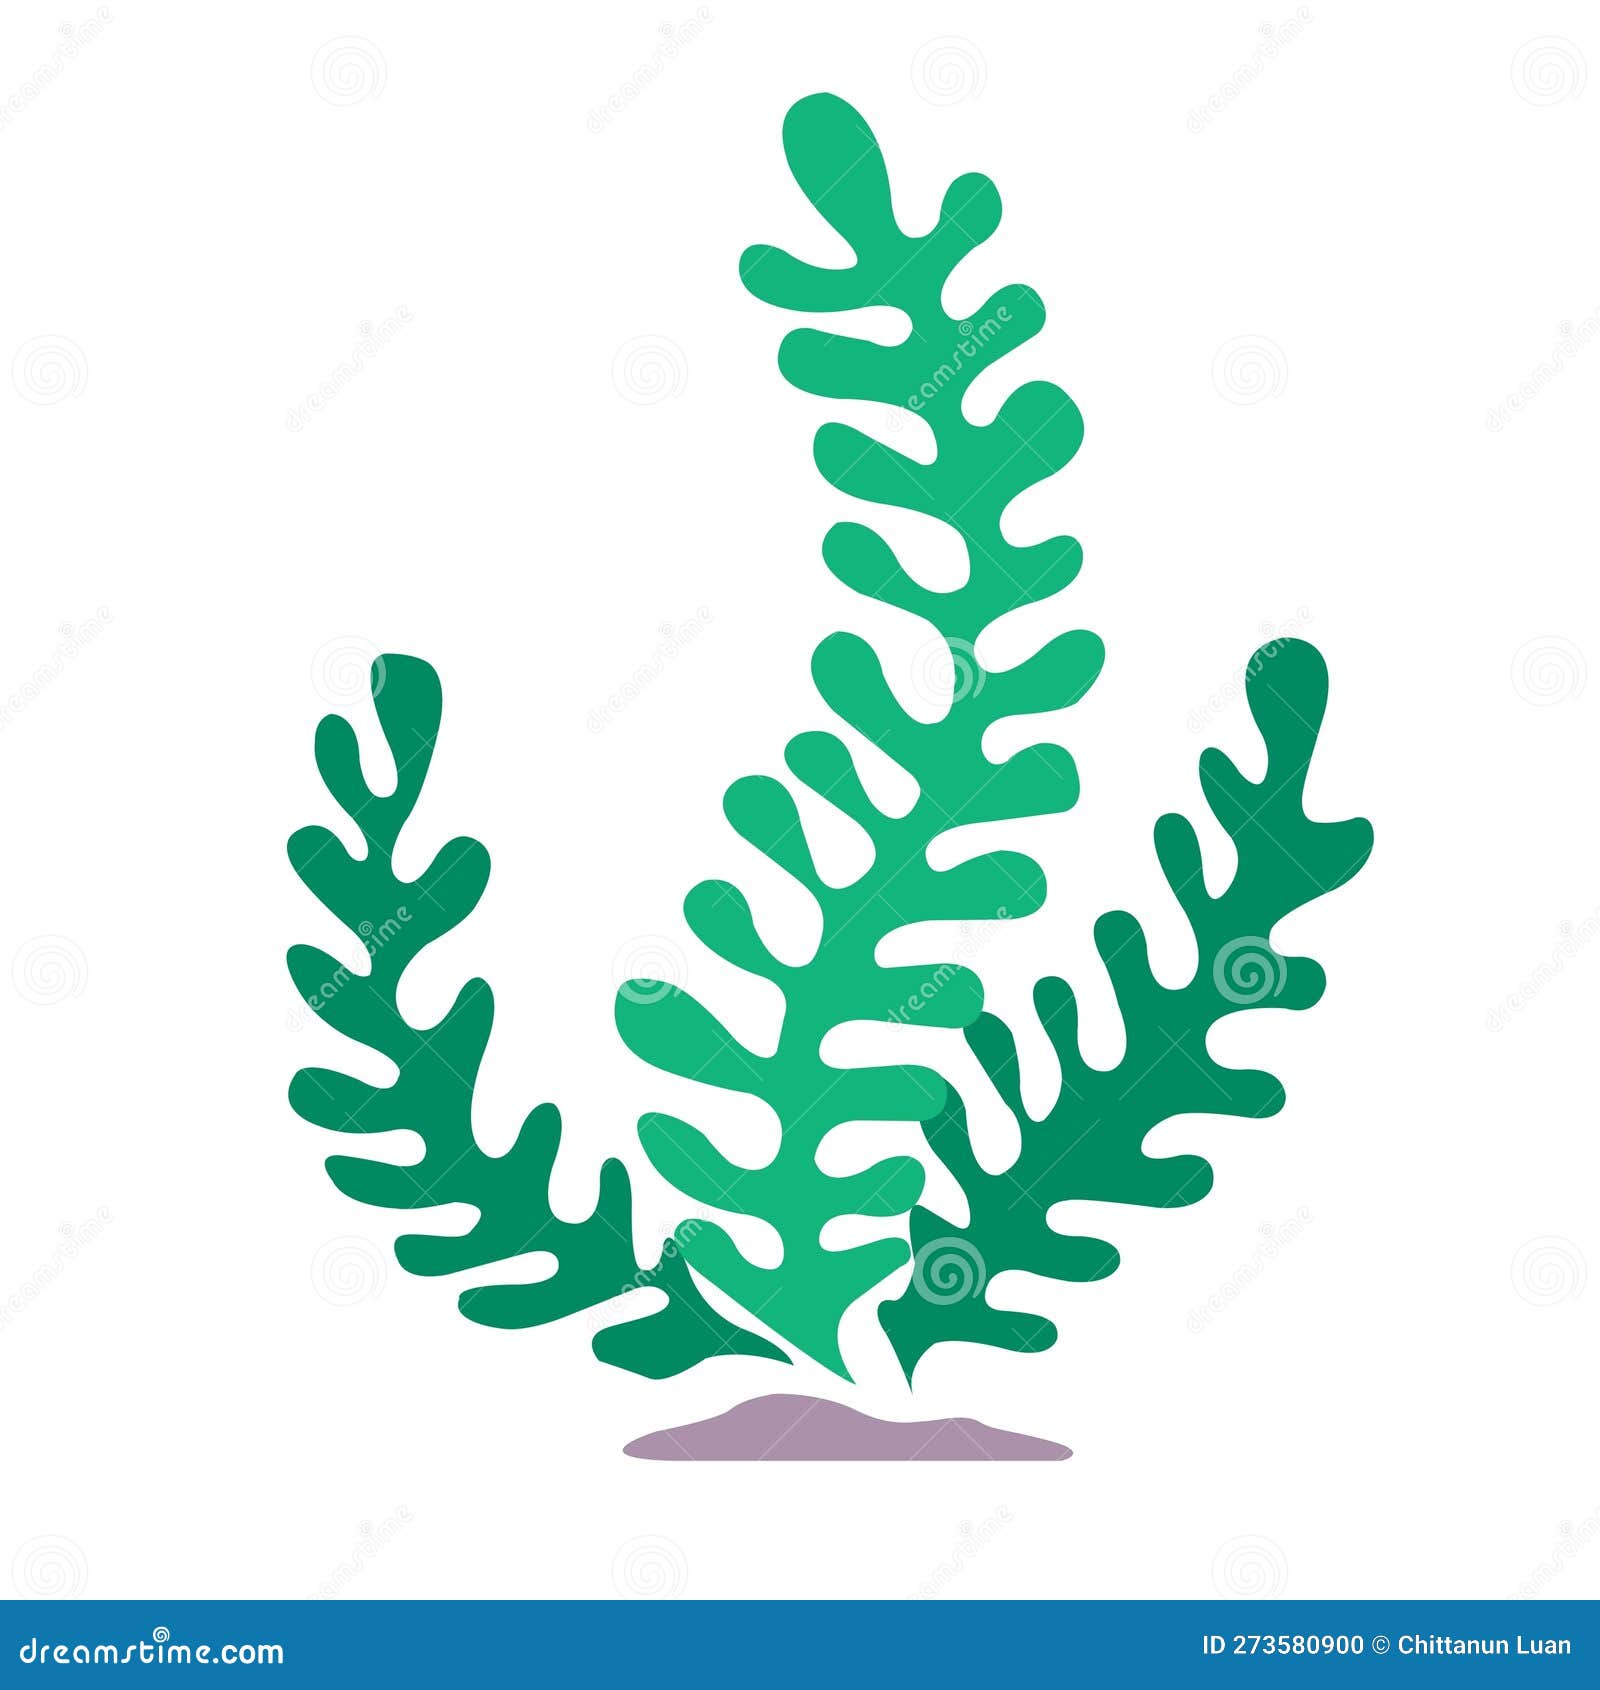 https://thumbs.dreamstime.com/z/seaweed-coral-sea-grass-flat-design-vector-decoration-aquatic-palnt-273580900.jpg